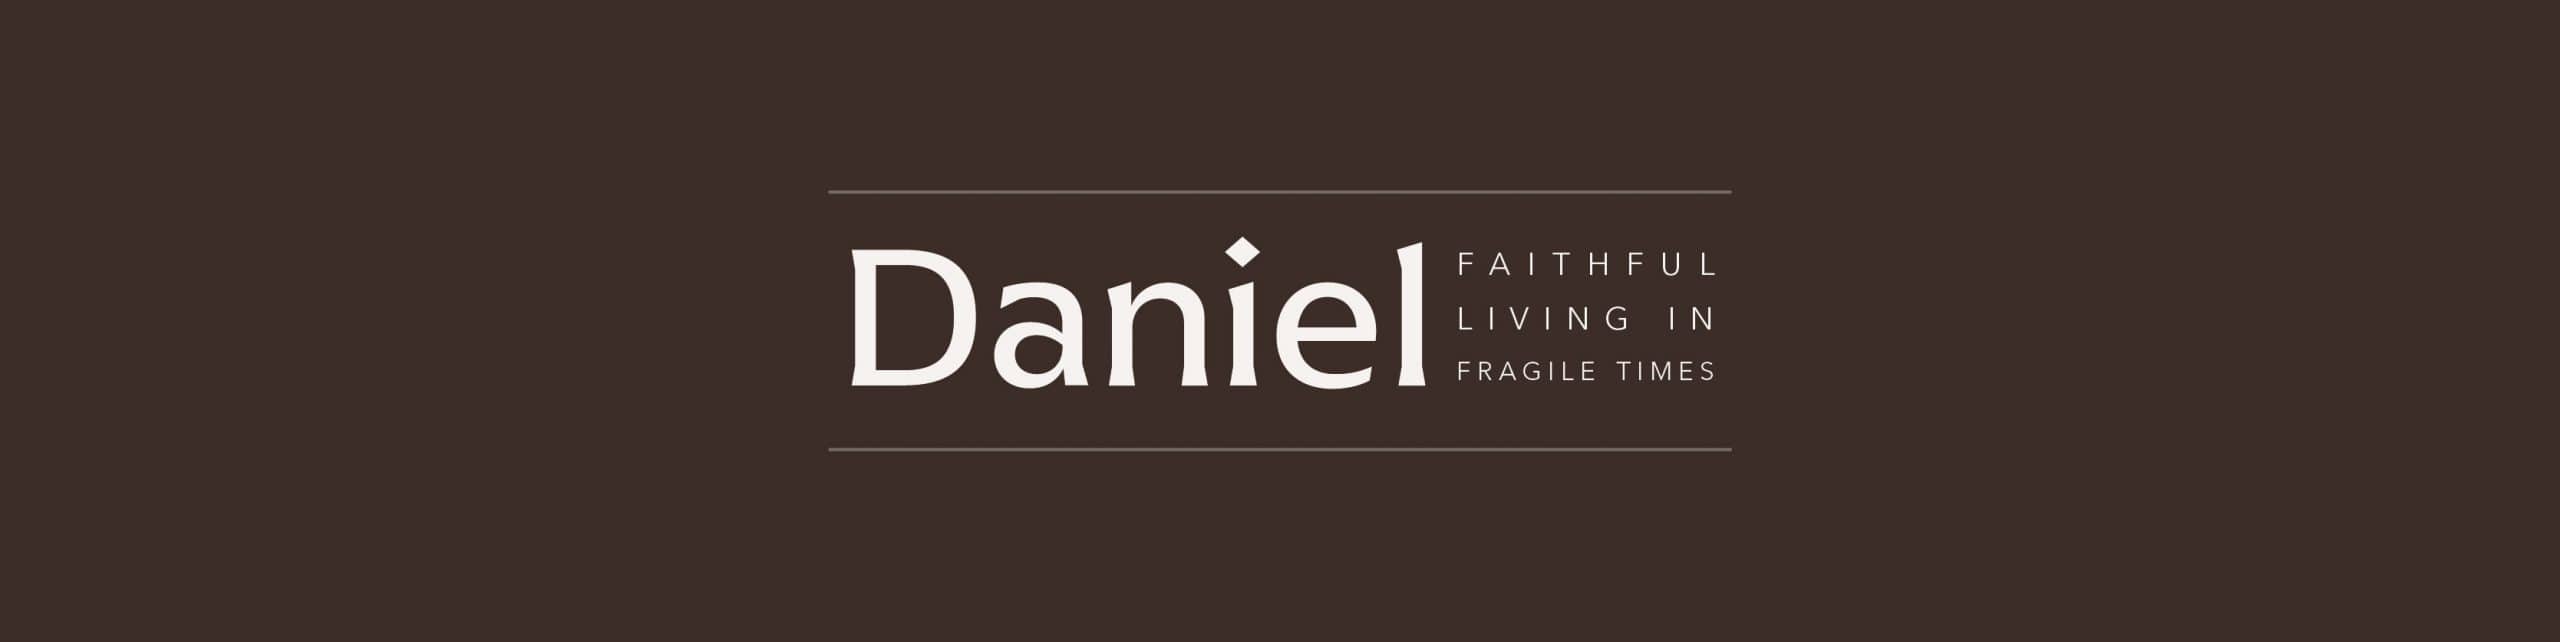 Daniel, Pt. 5